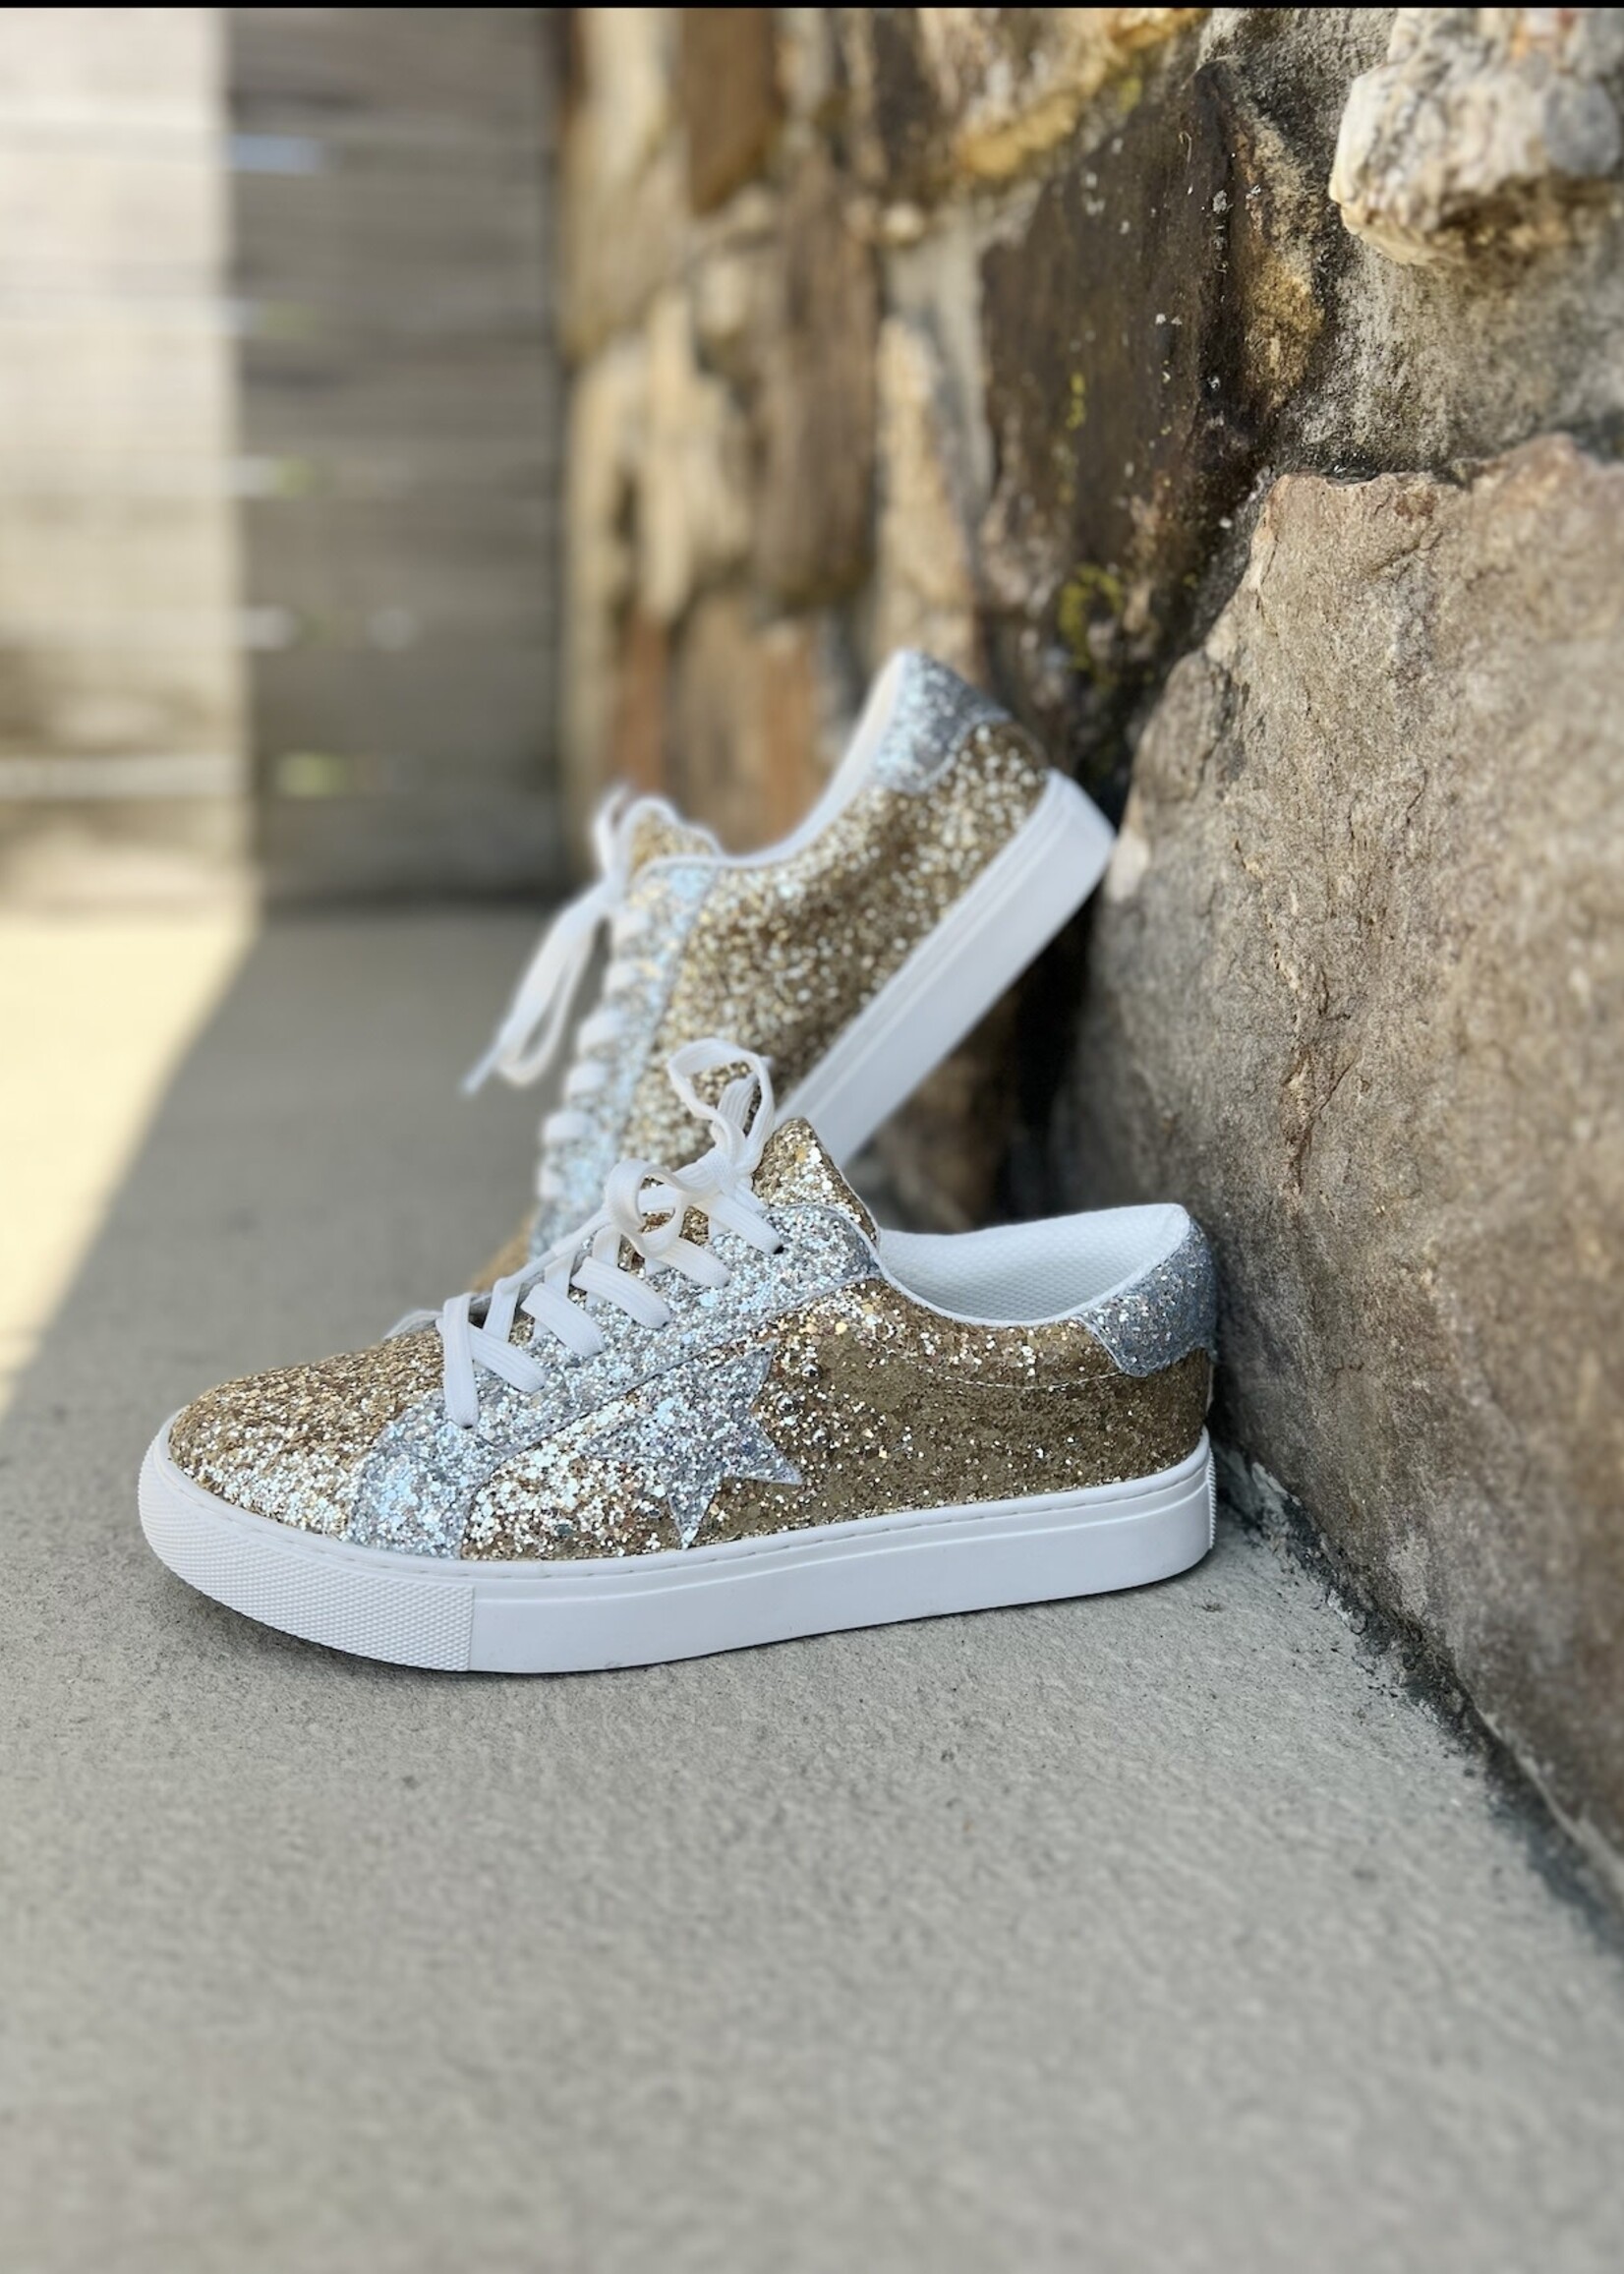 Corkys Corkys Super Nova Silver/ Gold Glitter Sneakers